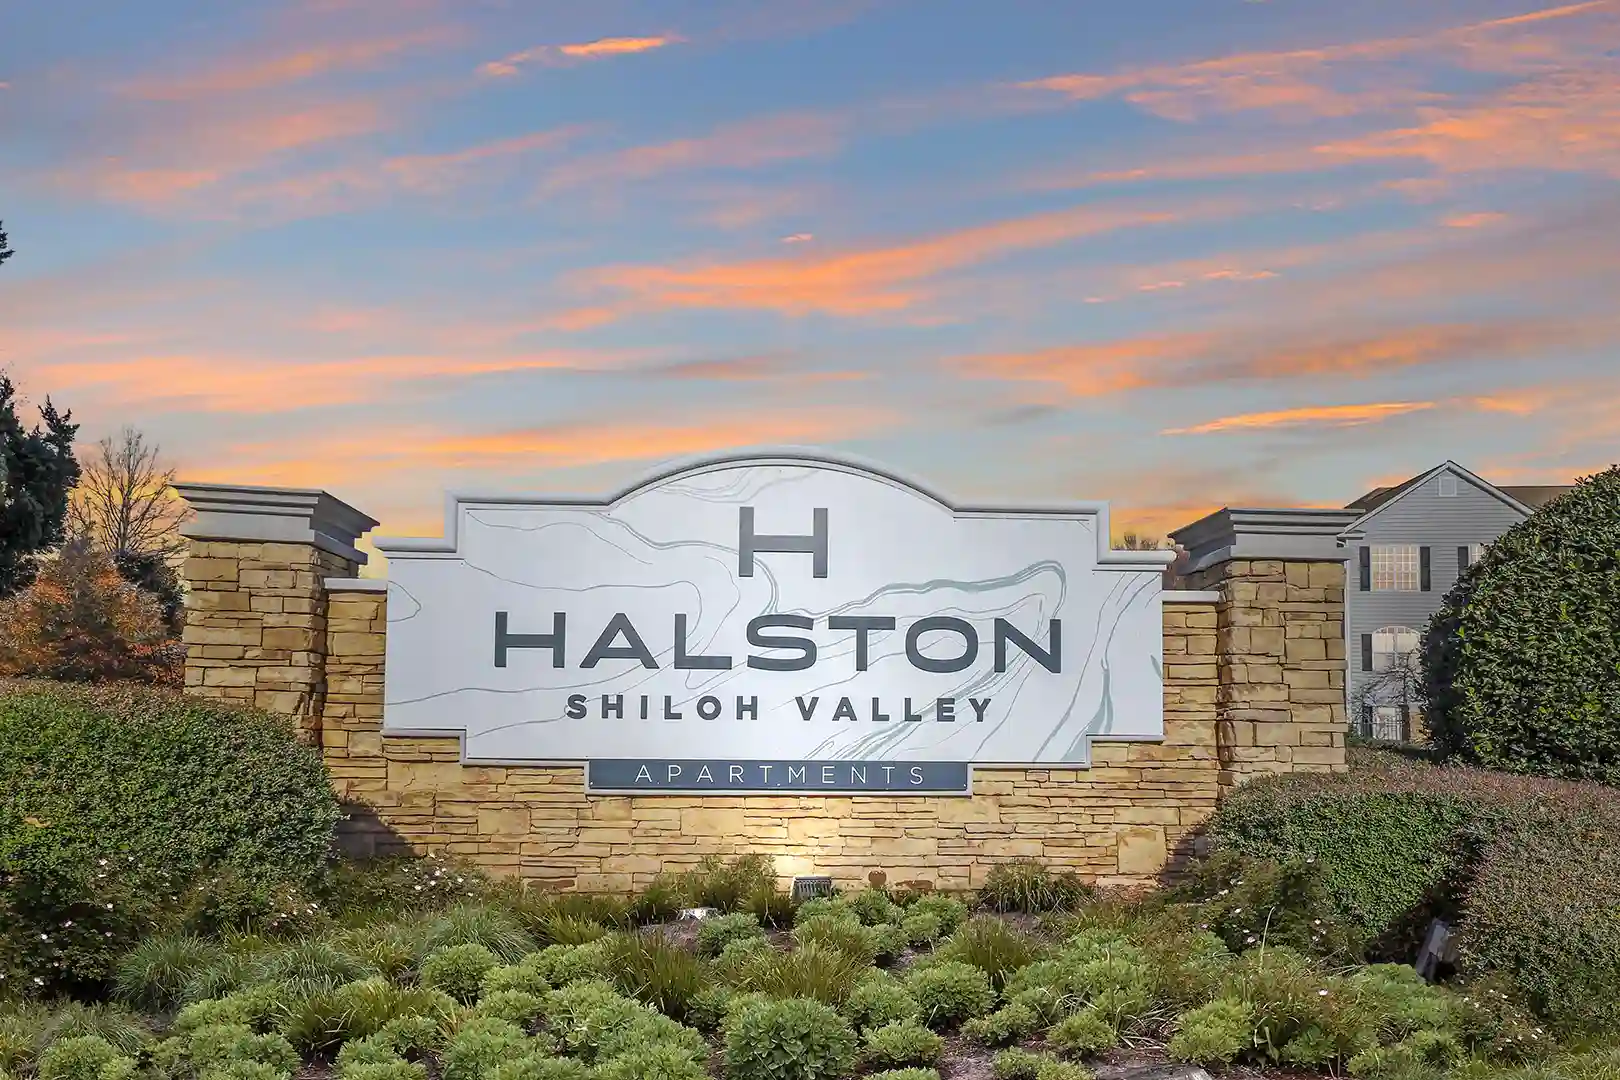 Halston Shiloh Valley